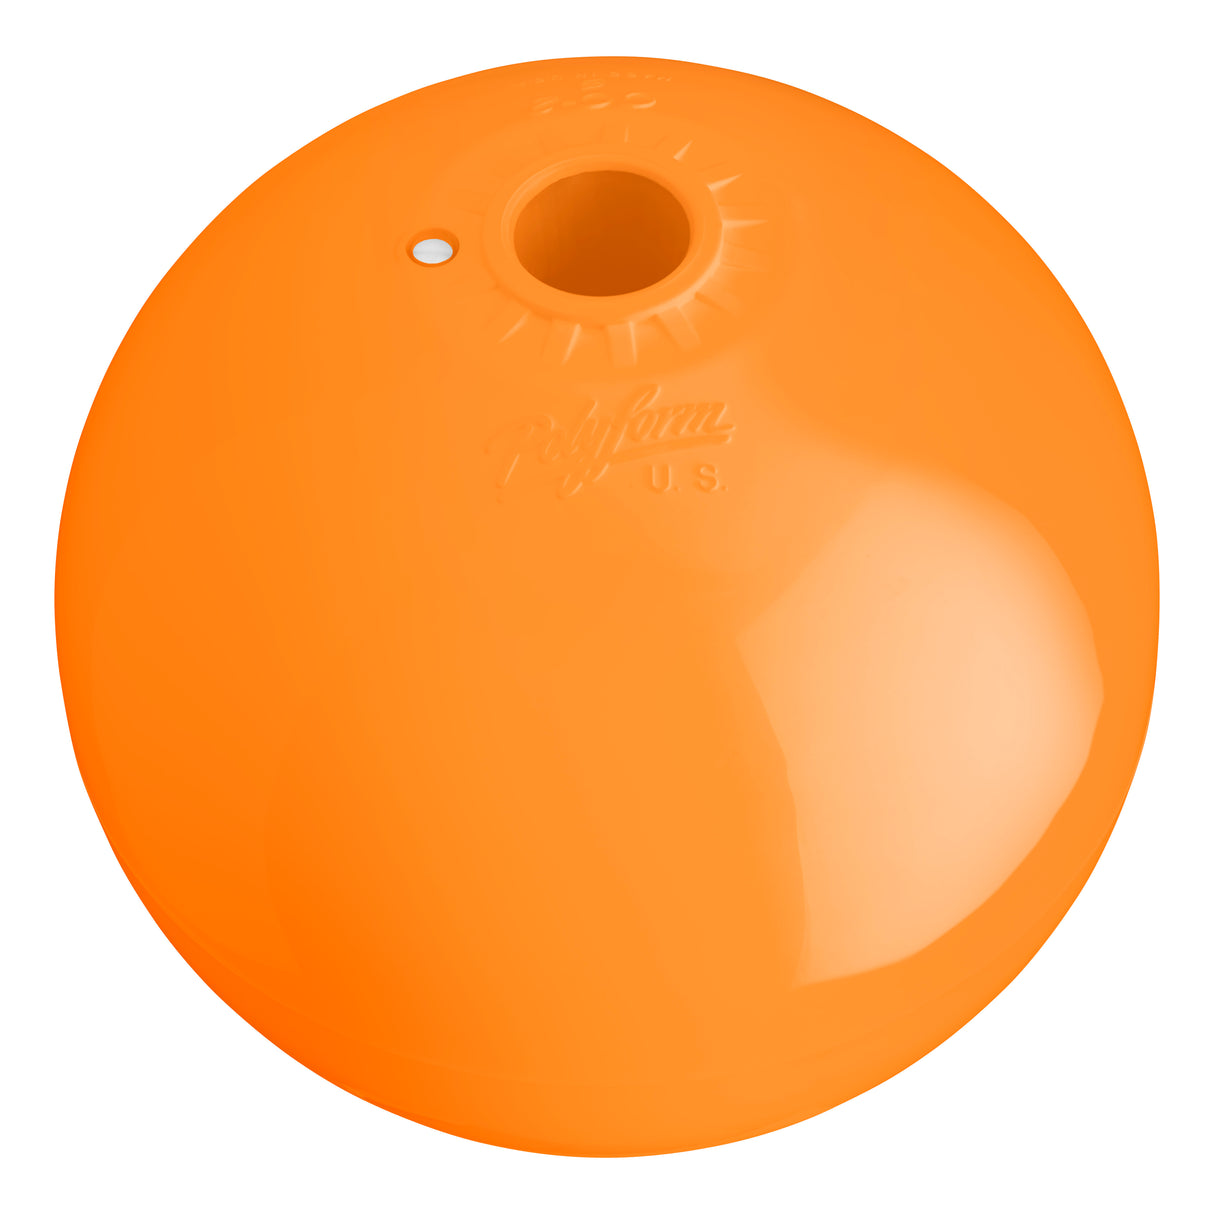 Hole through center mooring and marker buoy, Polyform CC-2 Orange angled shot